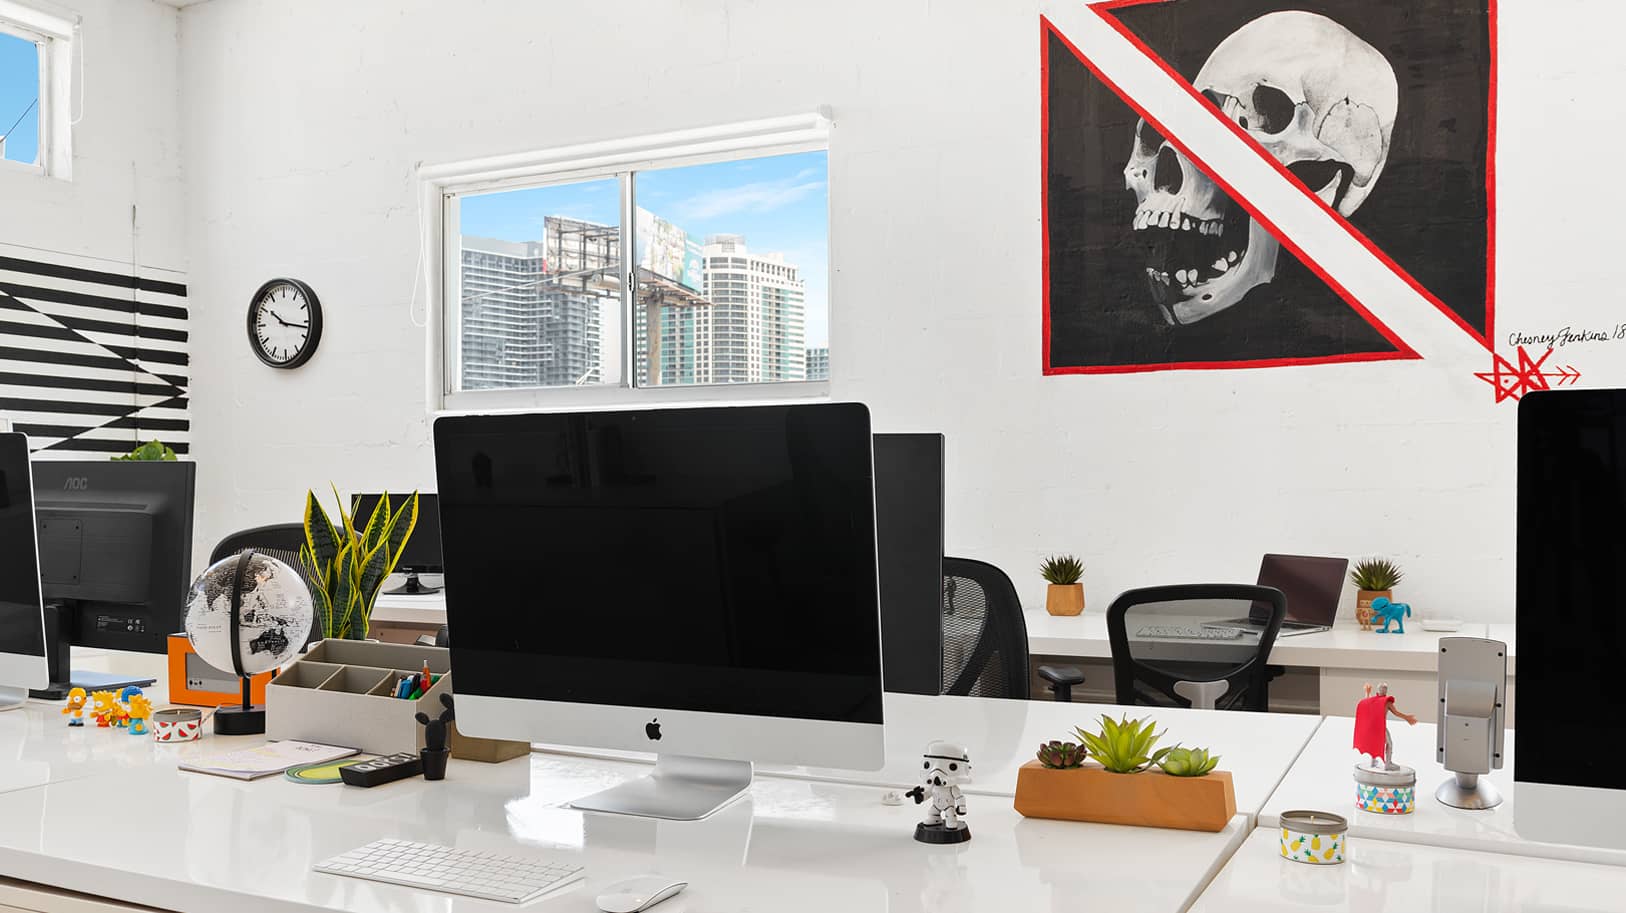 Apple iMac computer and decorative elements on workstation desktop | Think Twice studio